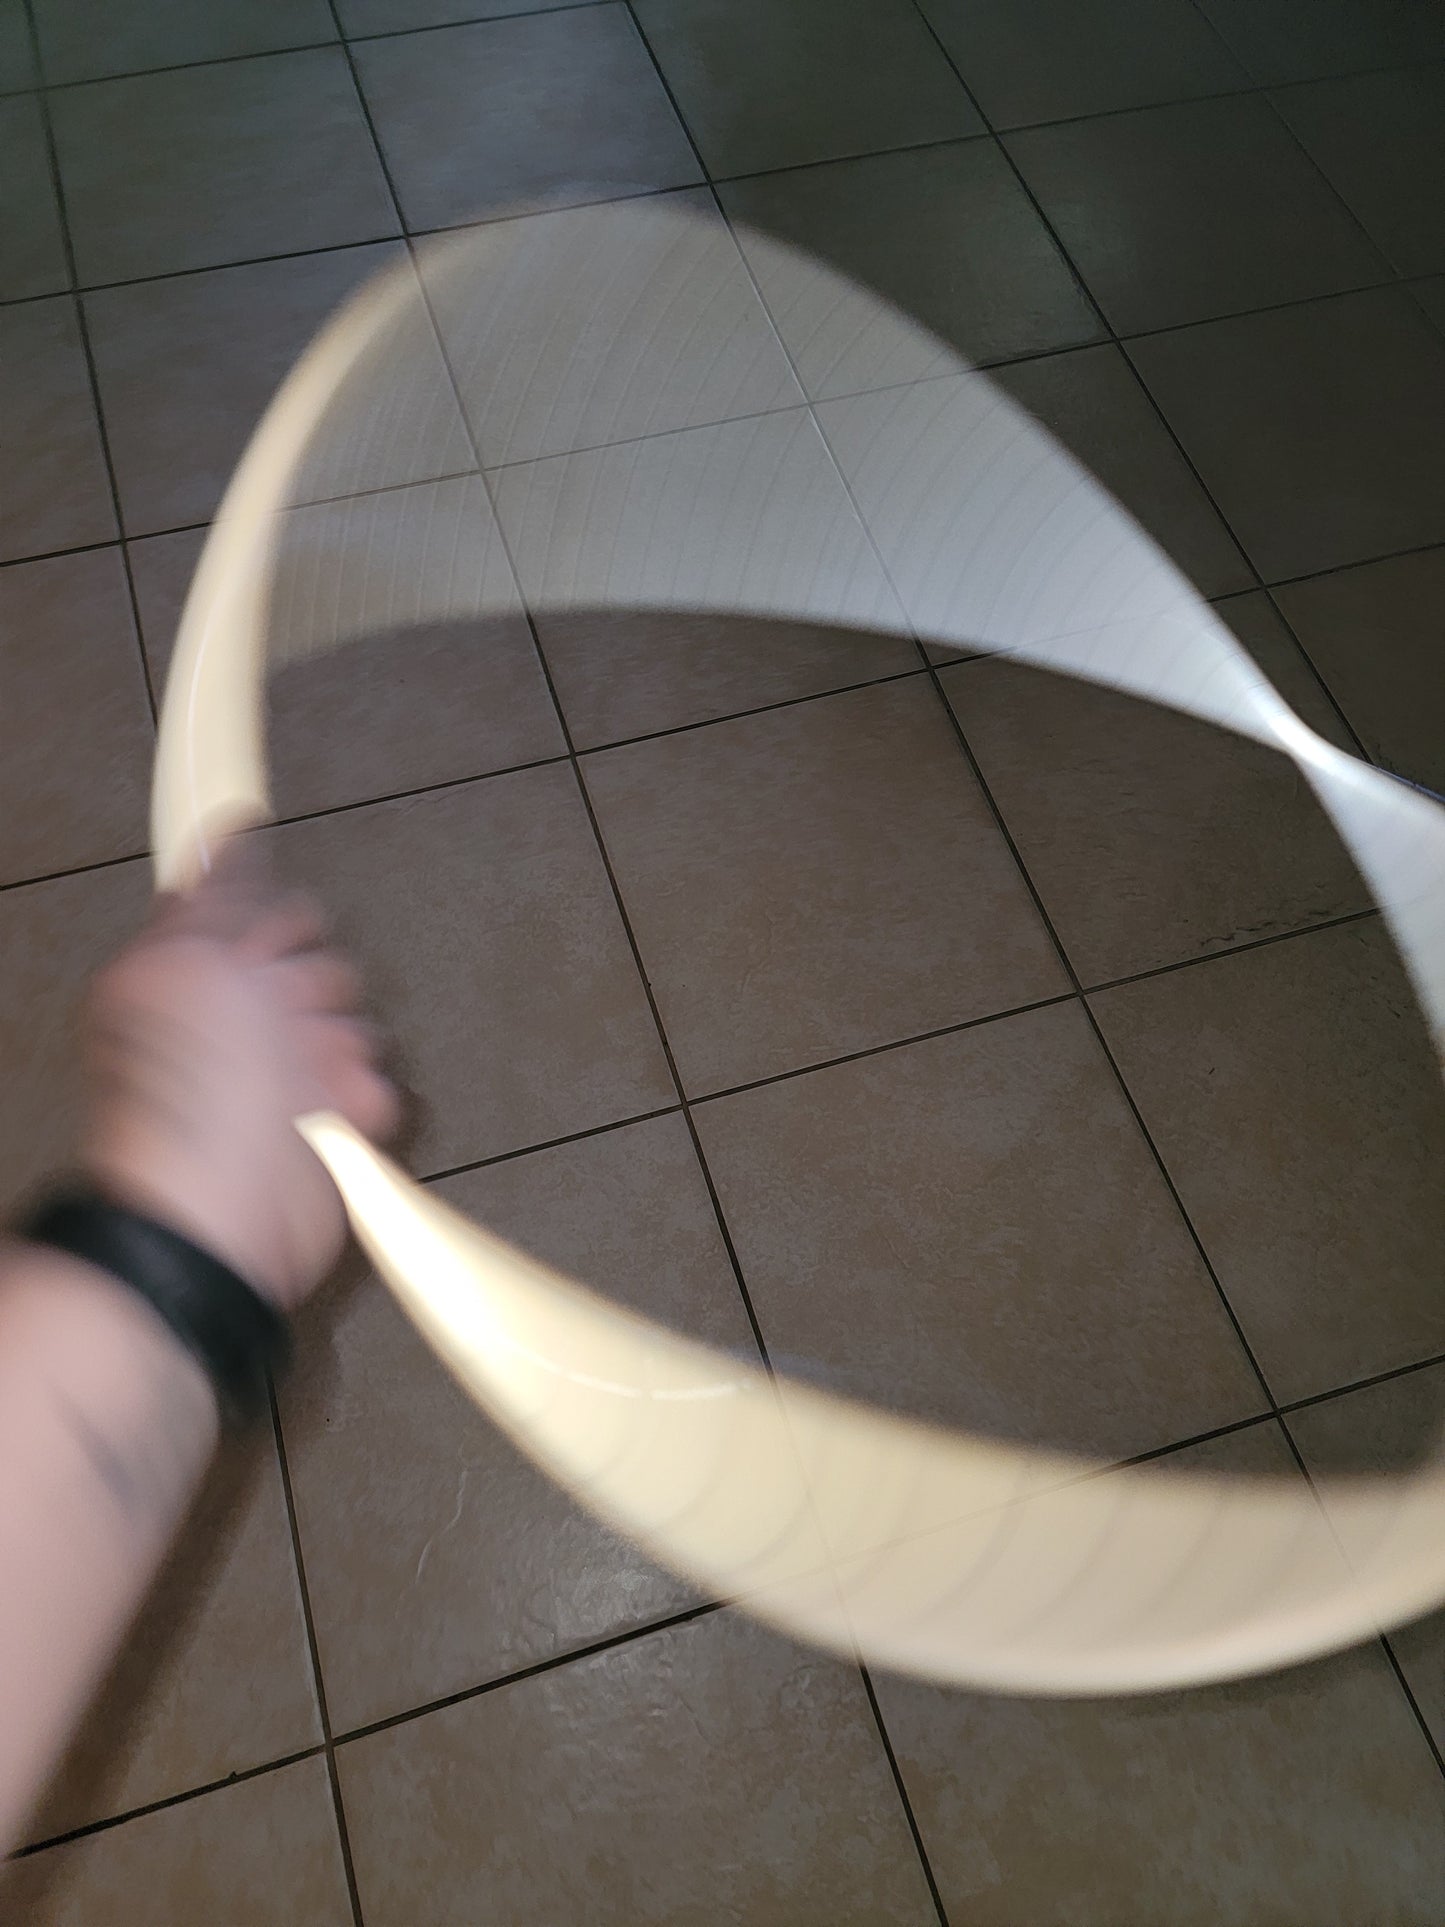 Moonlit Reflective Taped Hoop